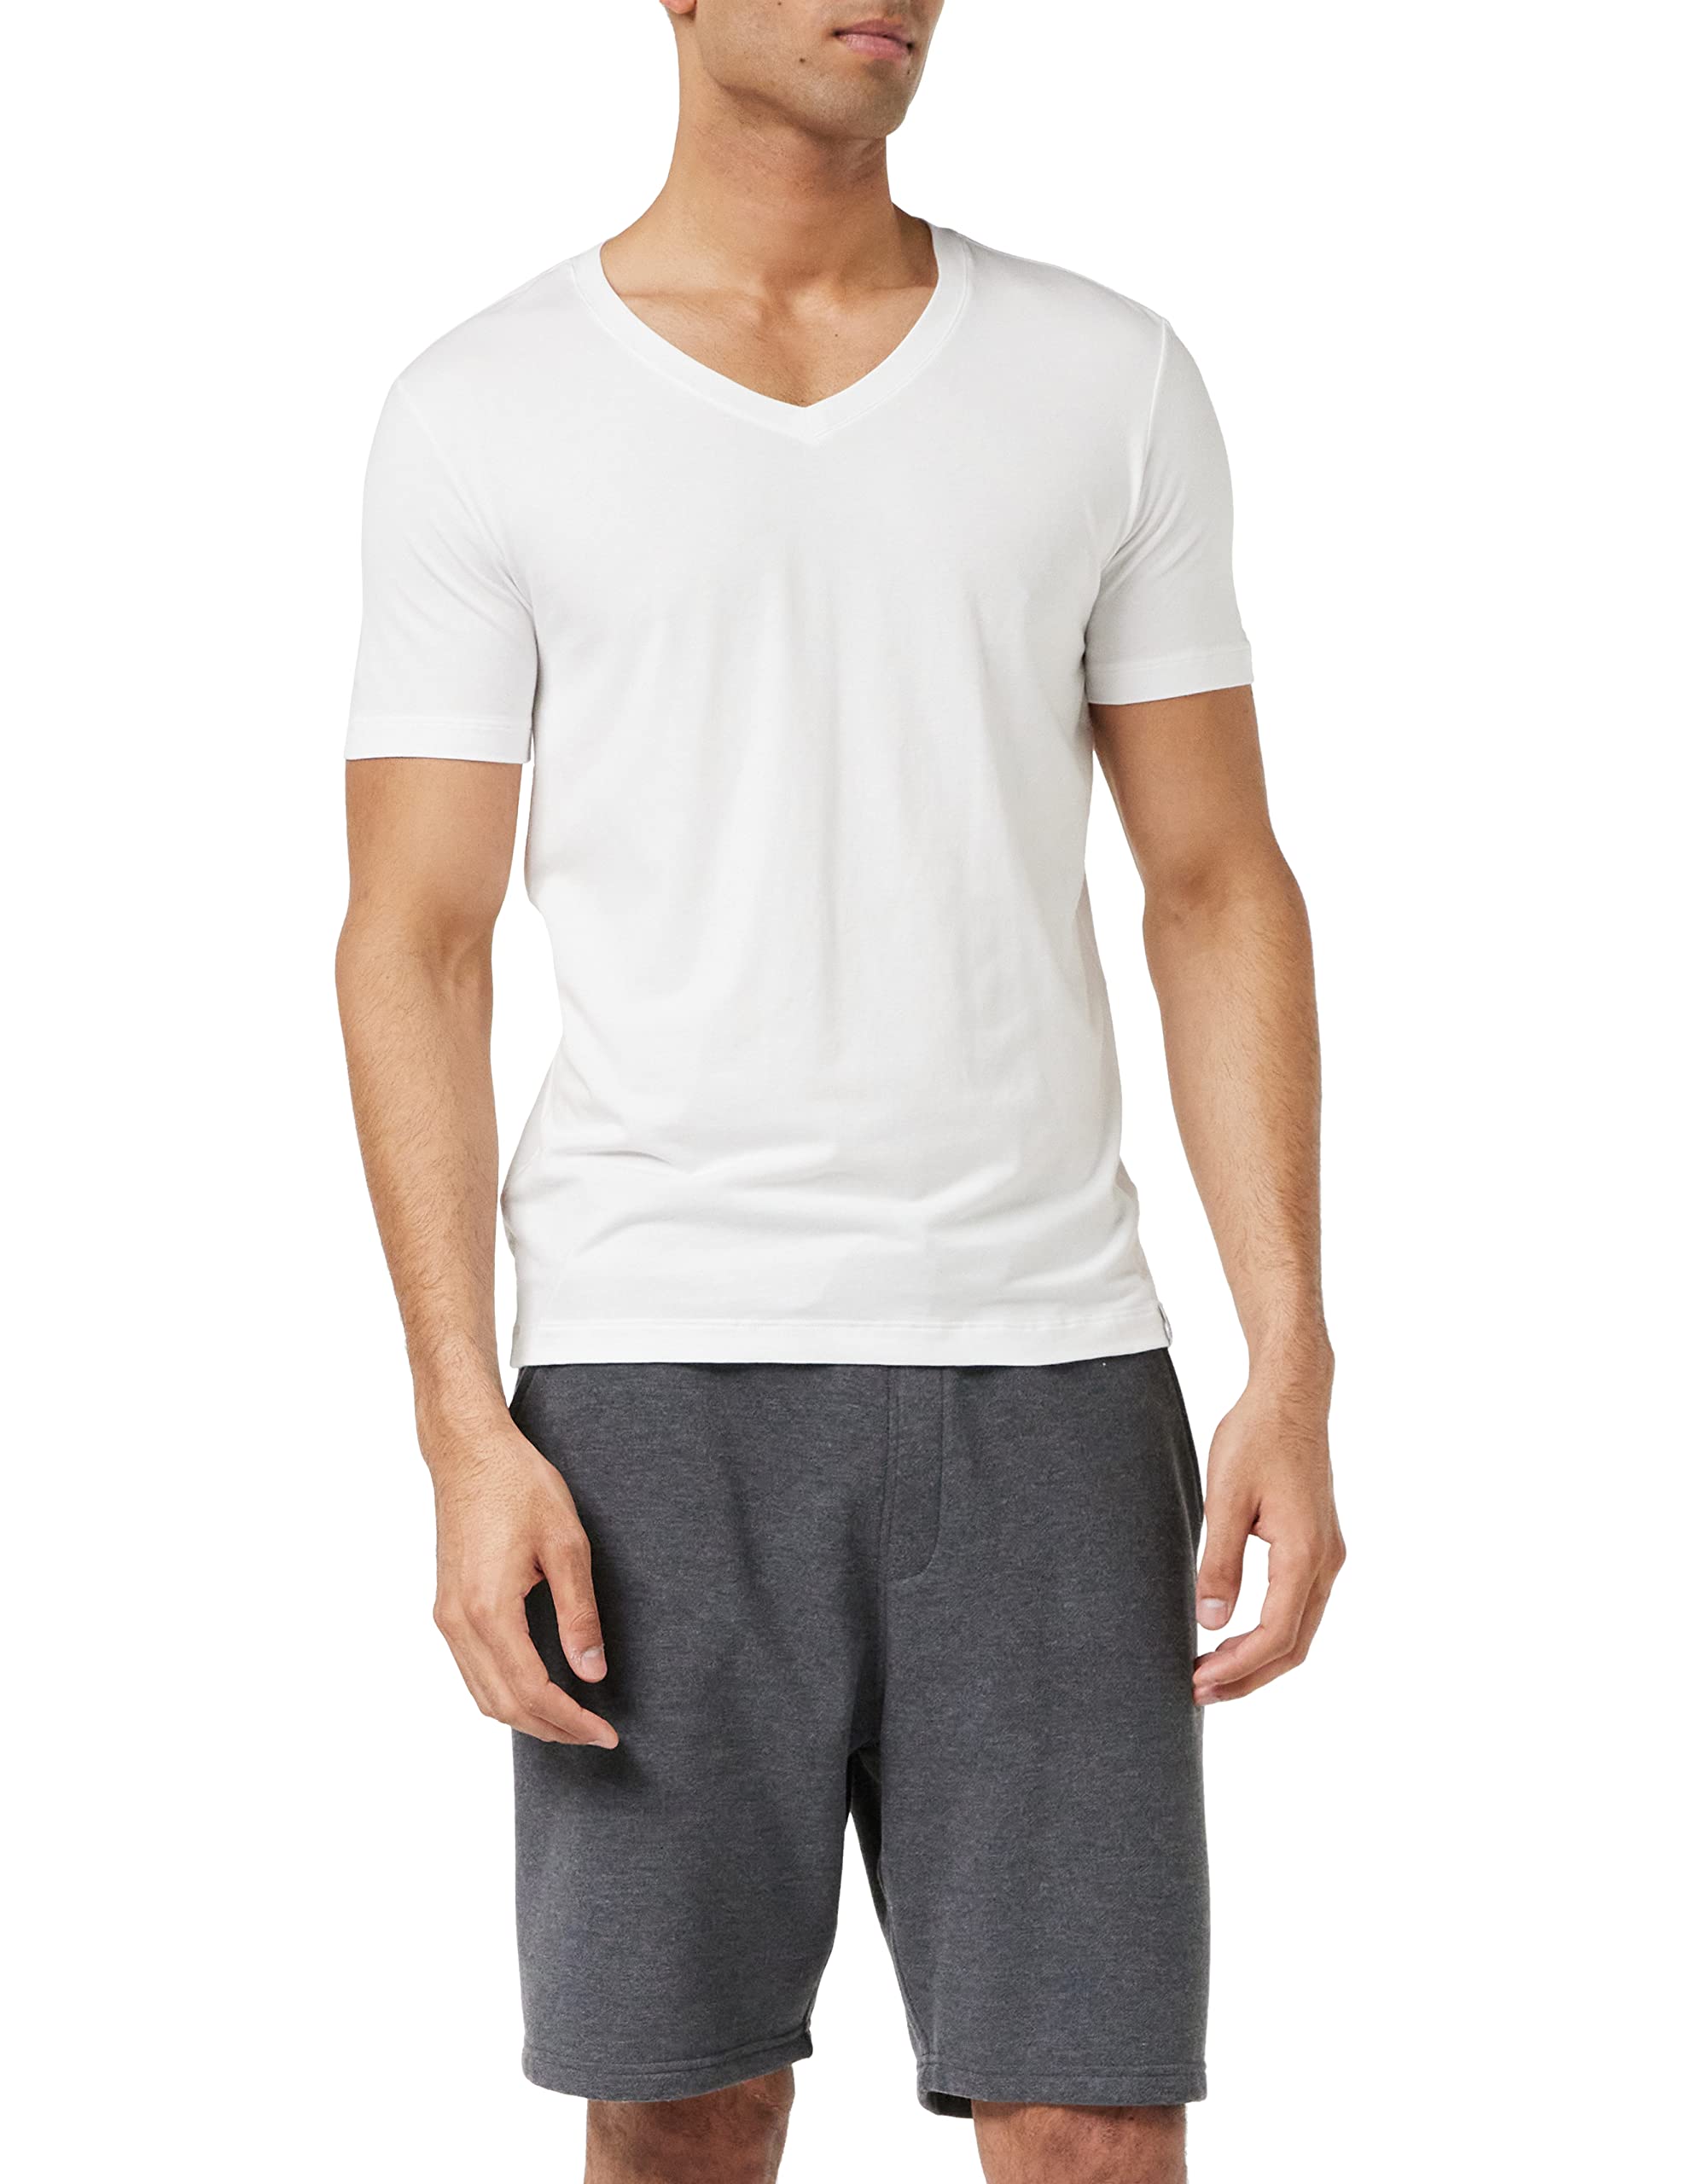 Schiesser Herren Unterhemd V-Ausschnitt atmungsaktiv und weich - Long Life Soft